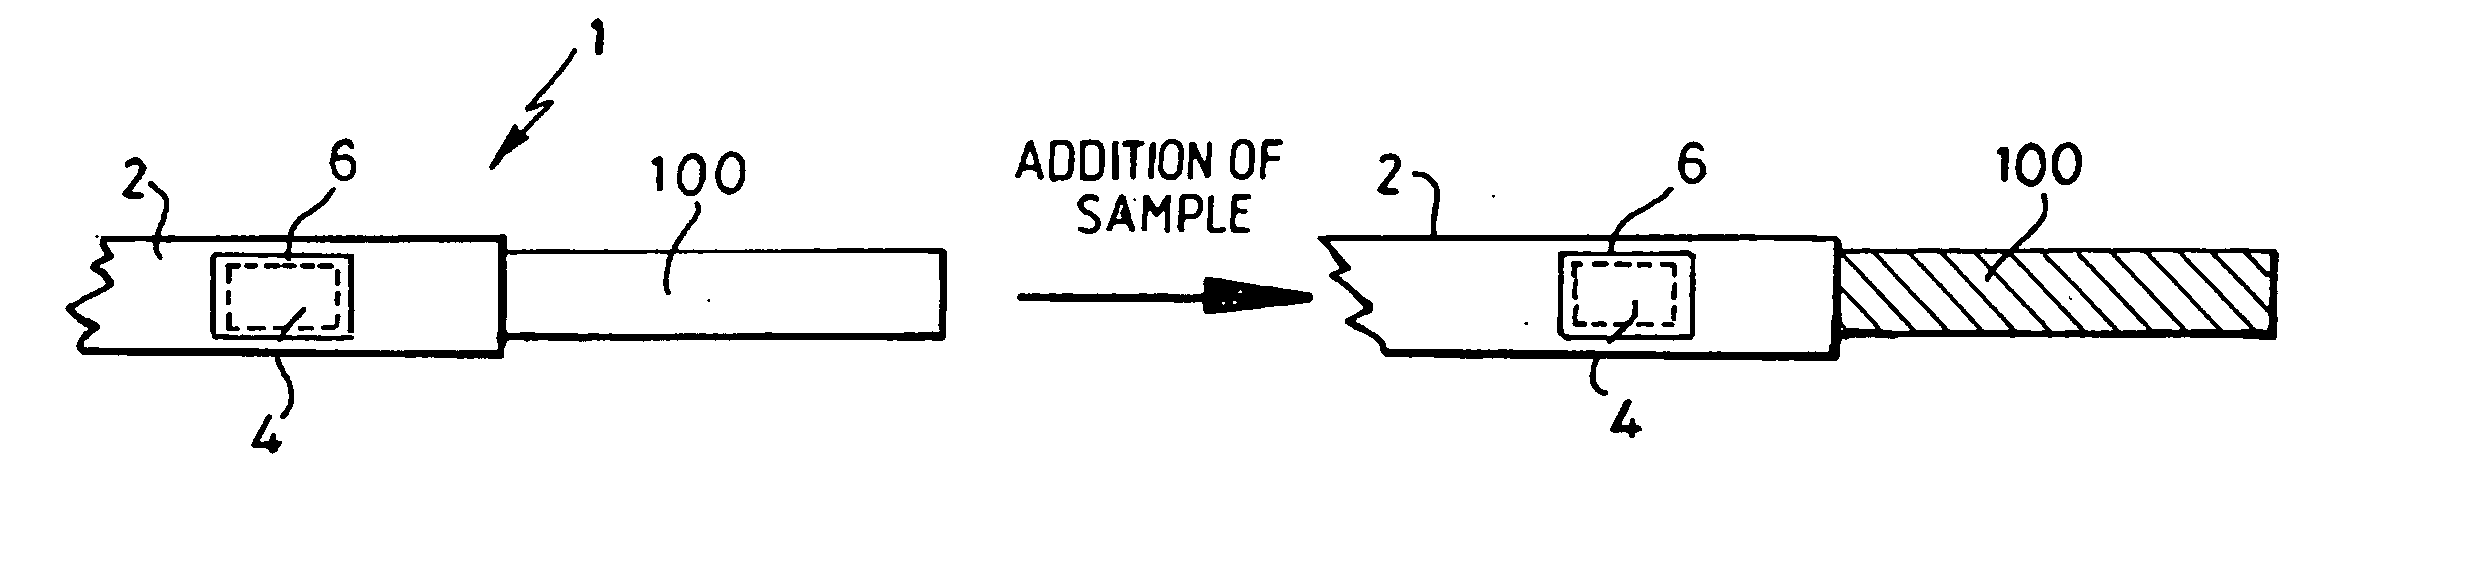 Liquid sample assay device